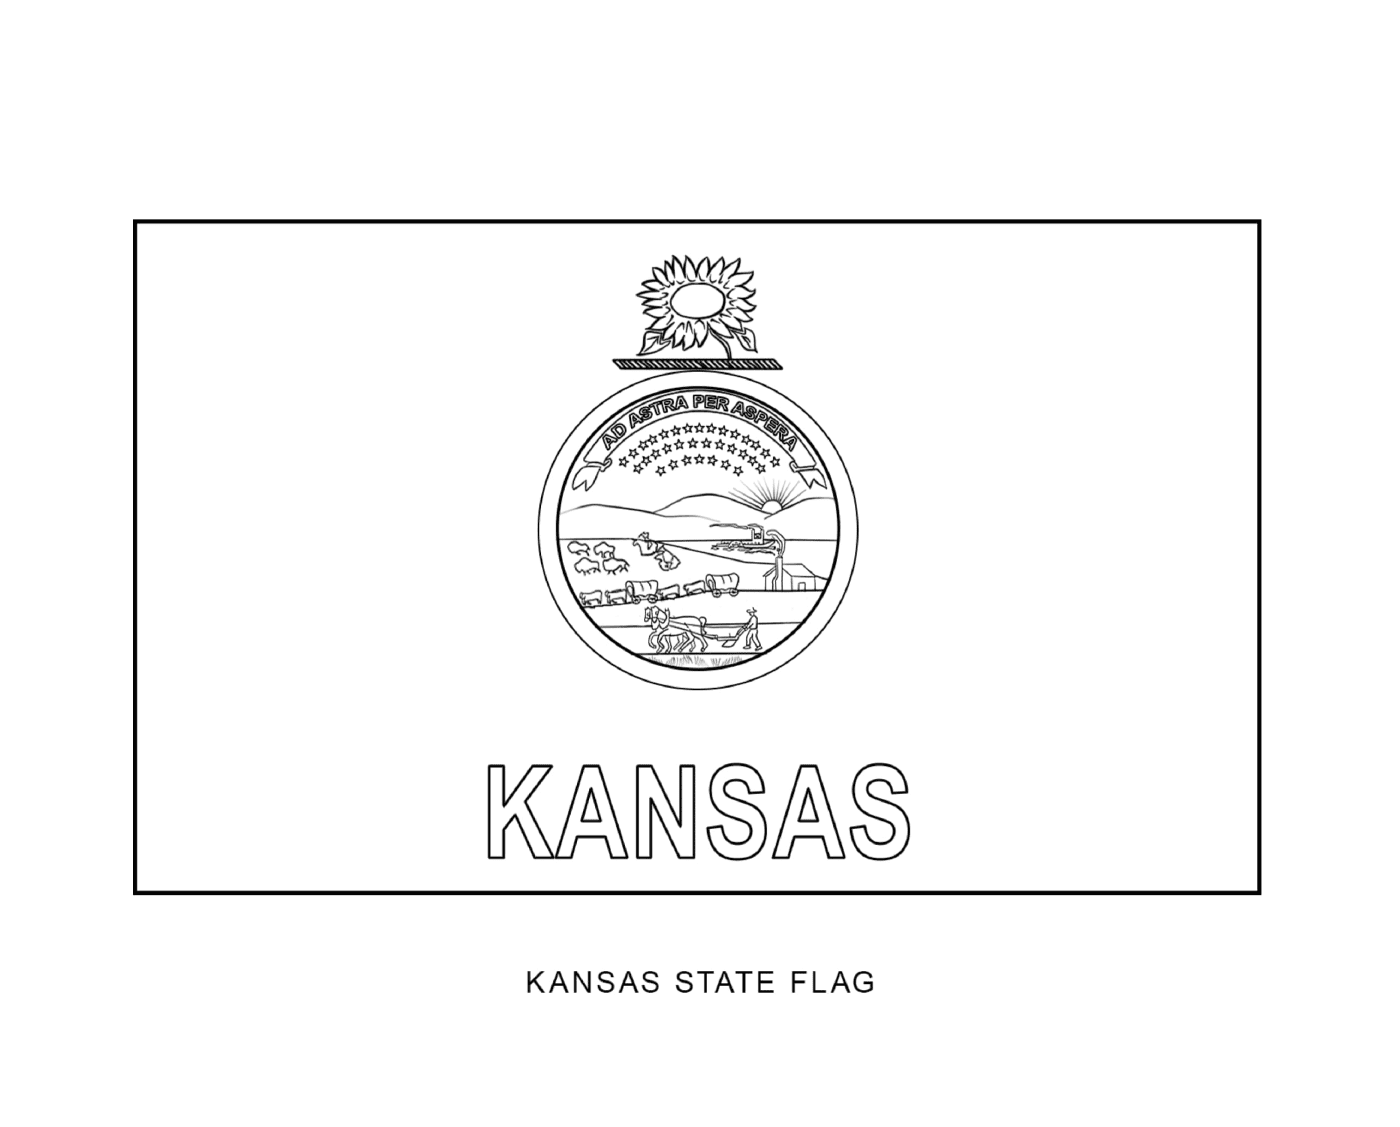  Kansas State flag in black and white 